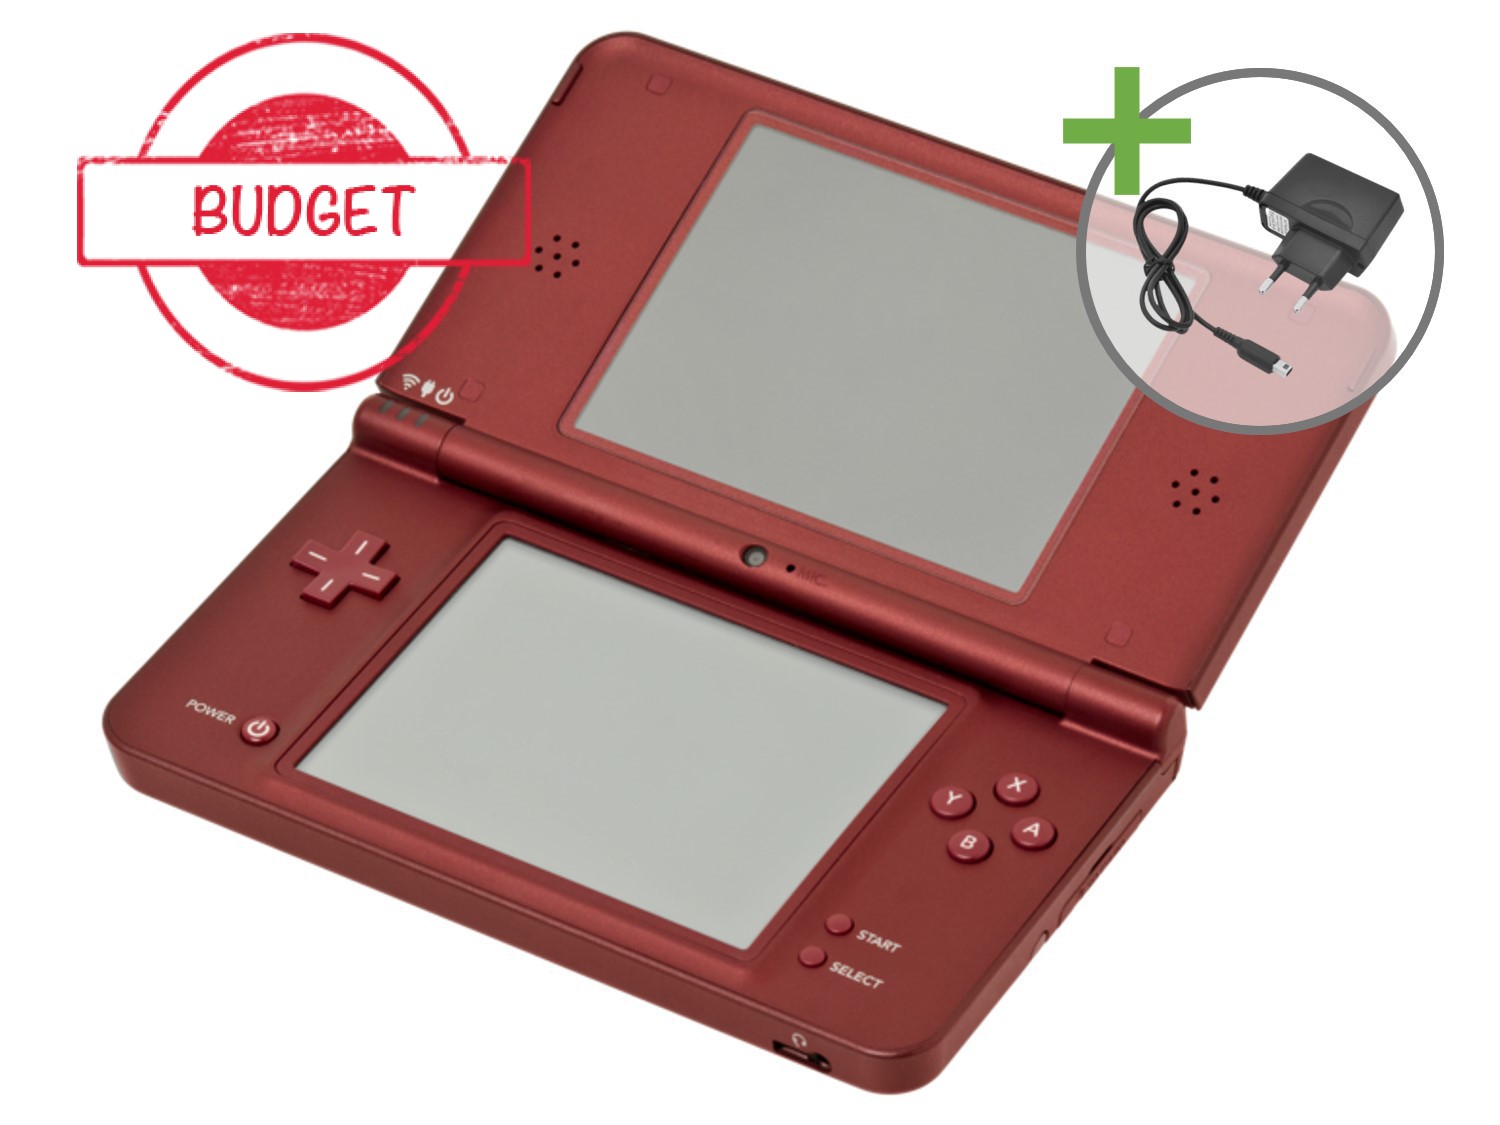 Nintendo DSi XL - Bordeaux Red - Budget - Nintendo DS Hardware